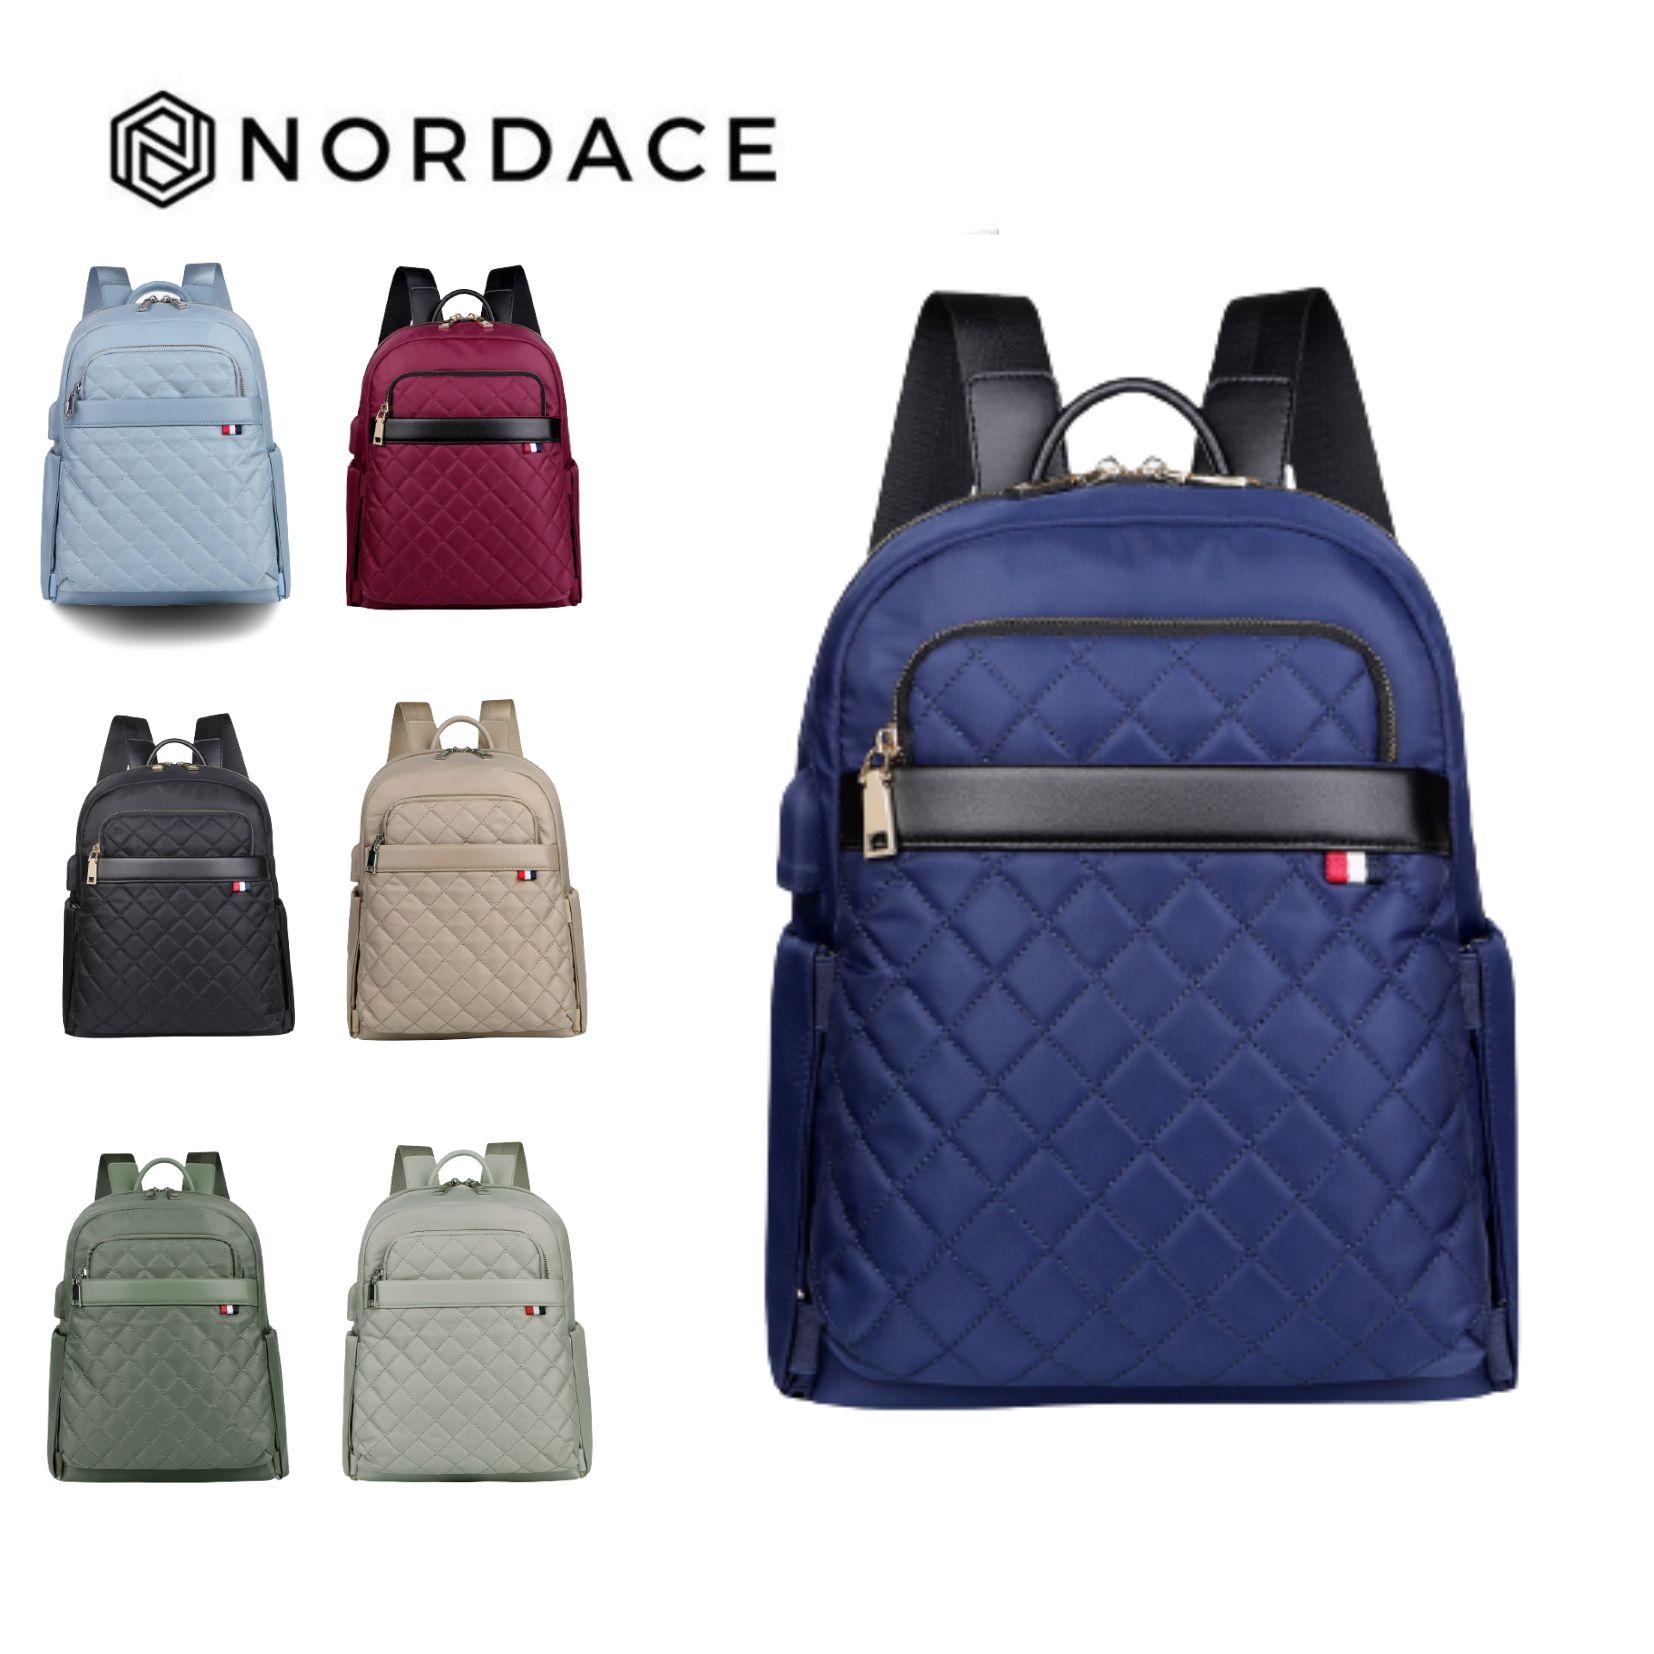 Nordace Ellie Mini- 後背包 充電雙肩包 雙肩包 筆電包 電腦包 旅行包 休閒包 防水背包 7色可選-藍色 0